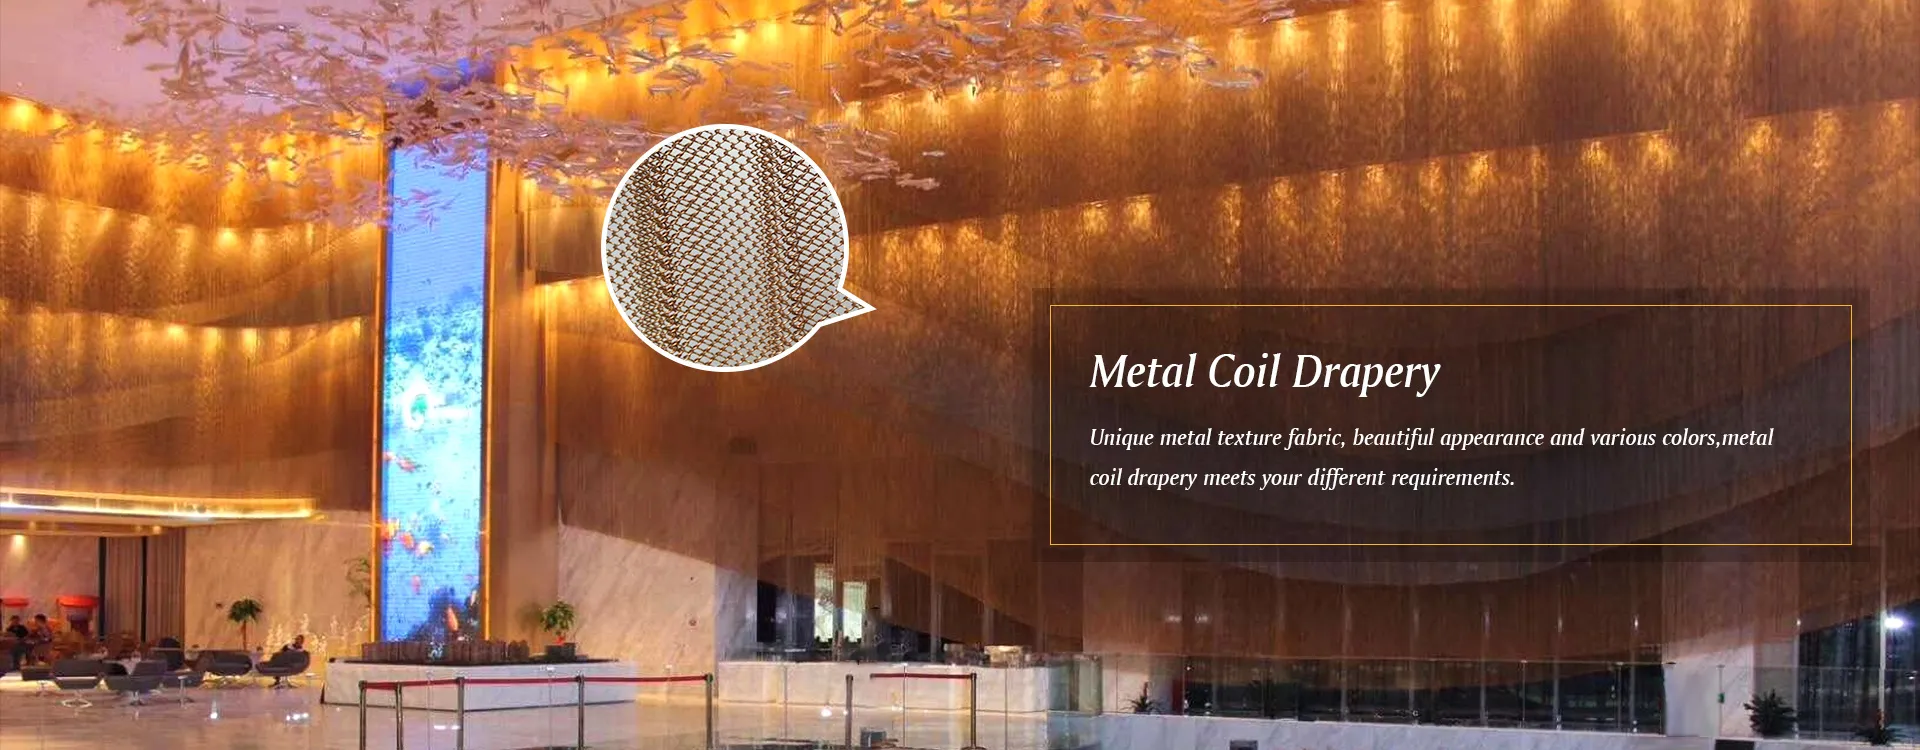 Metal Coil Drapery